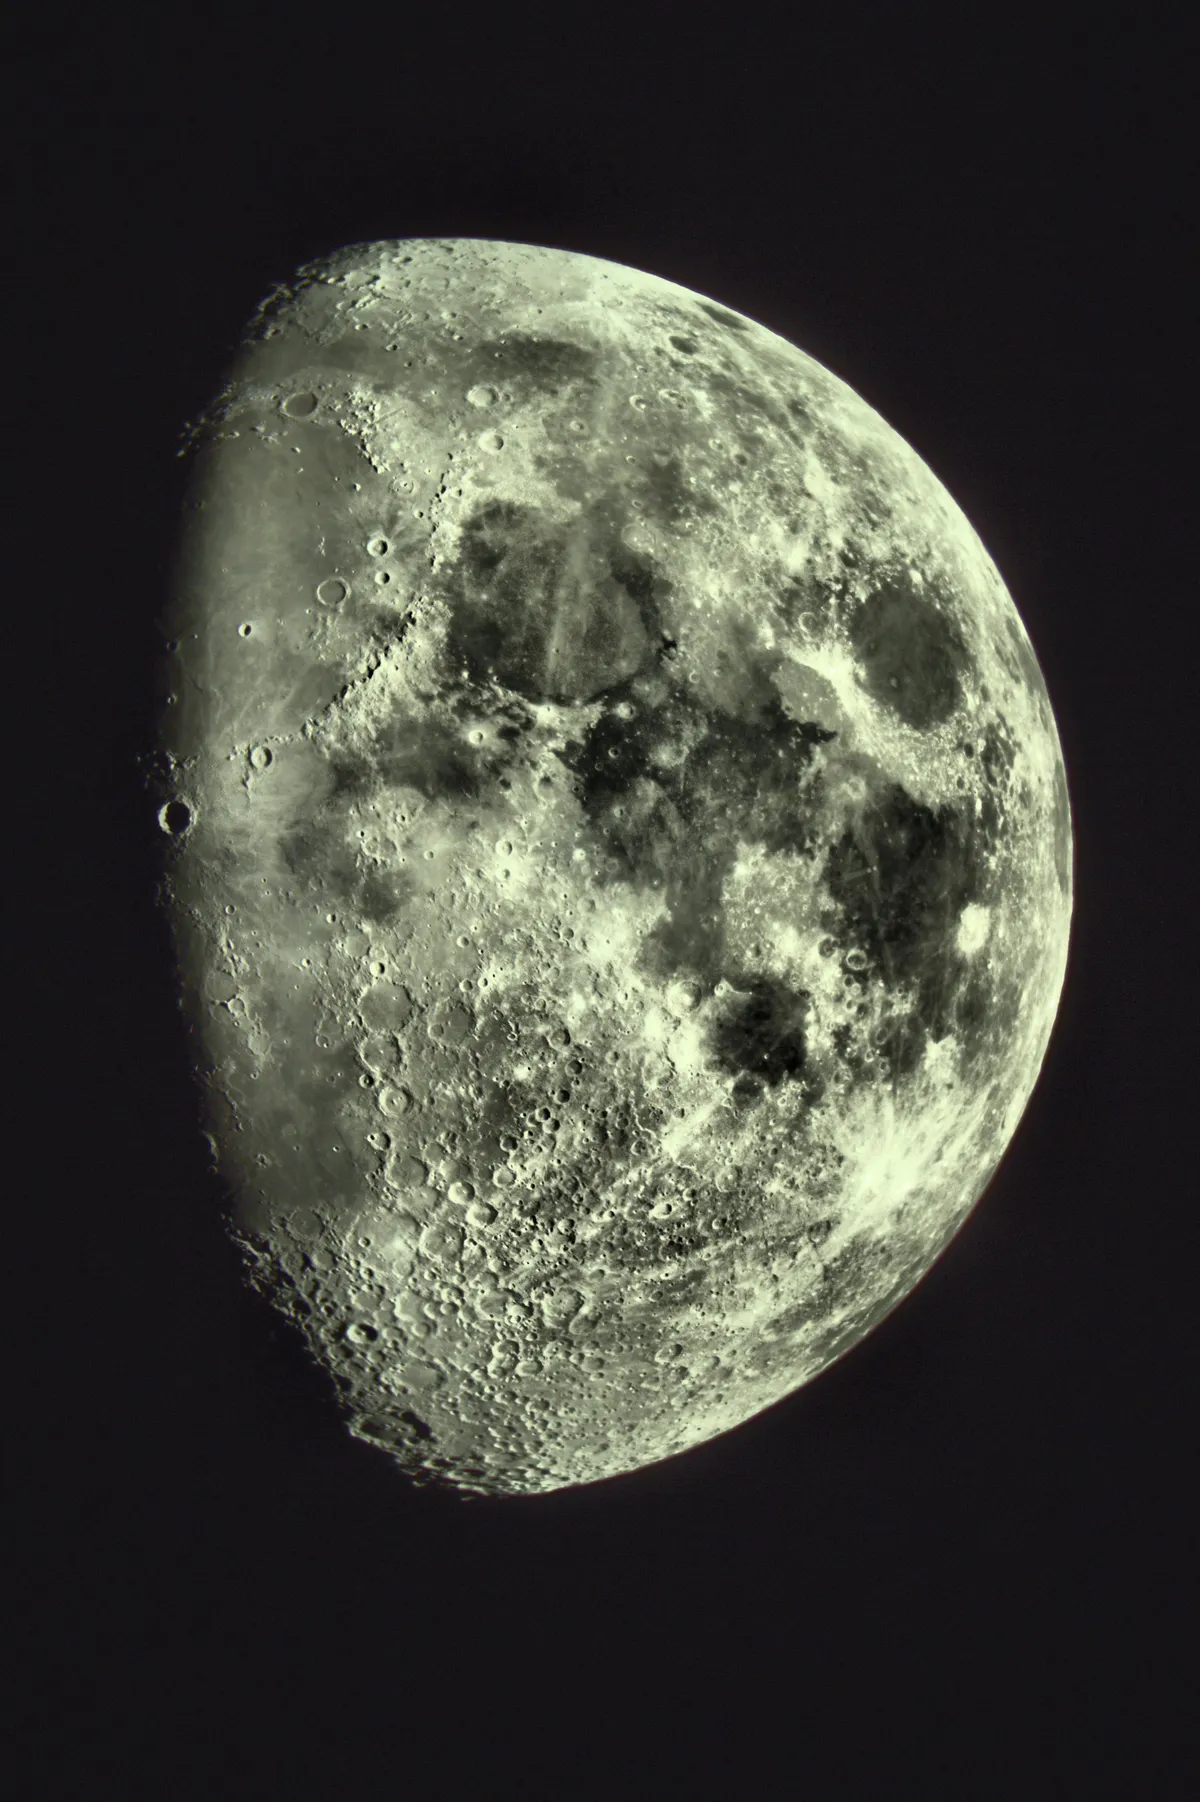 Moon by Stephen Gill, Burnley, UK. Equipment: C11, NEQ6 Pro, Canon 600D modified